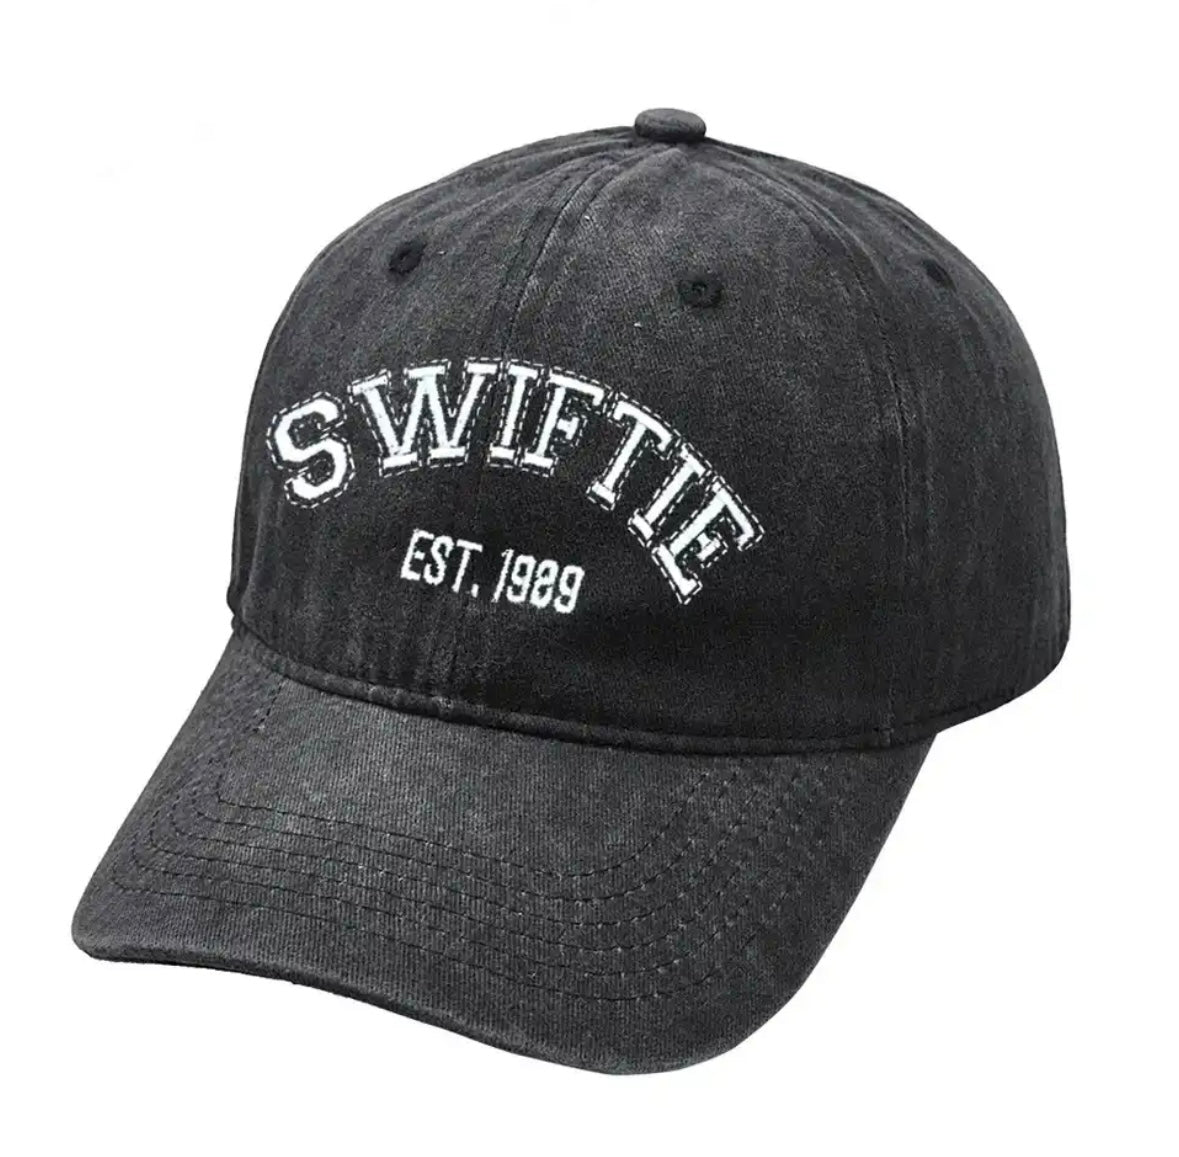 Swiftie Baseball Cap in Black/Dark Grey